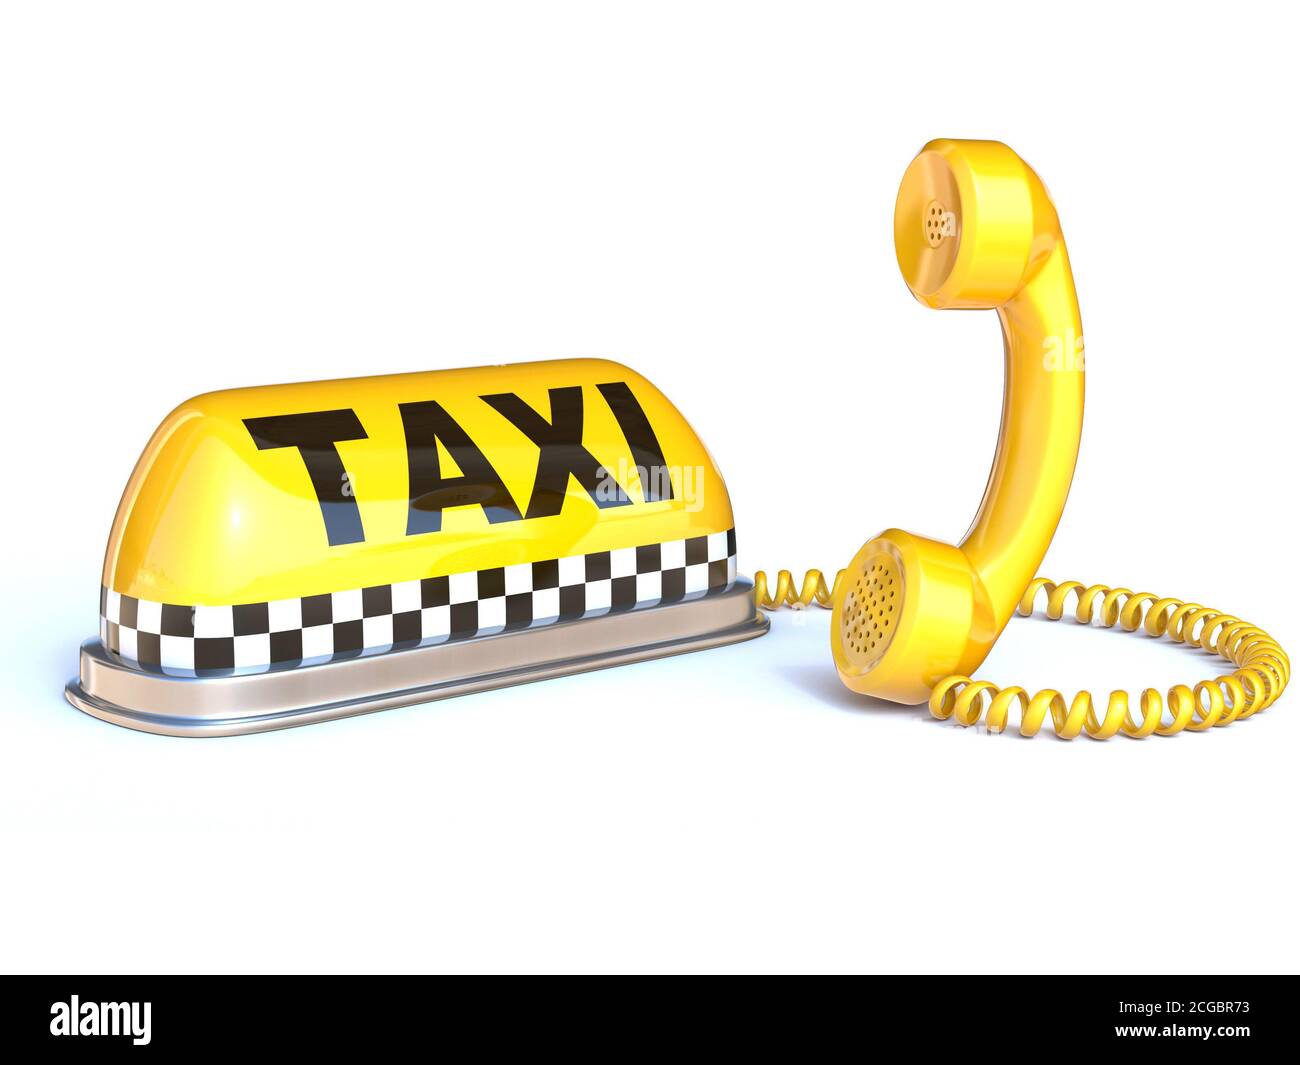 Заказ такси без телефона. Значок такси. Такси иконка. Значок телефона такси. Вывеска такси.